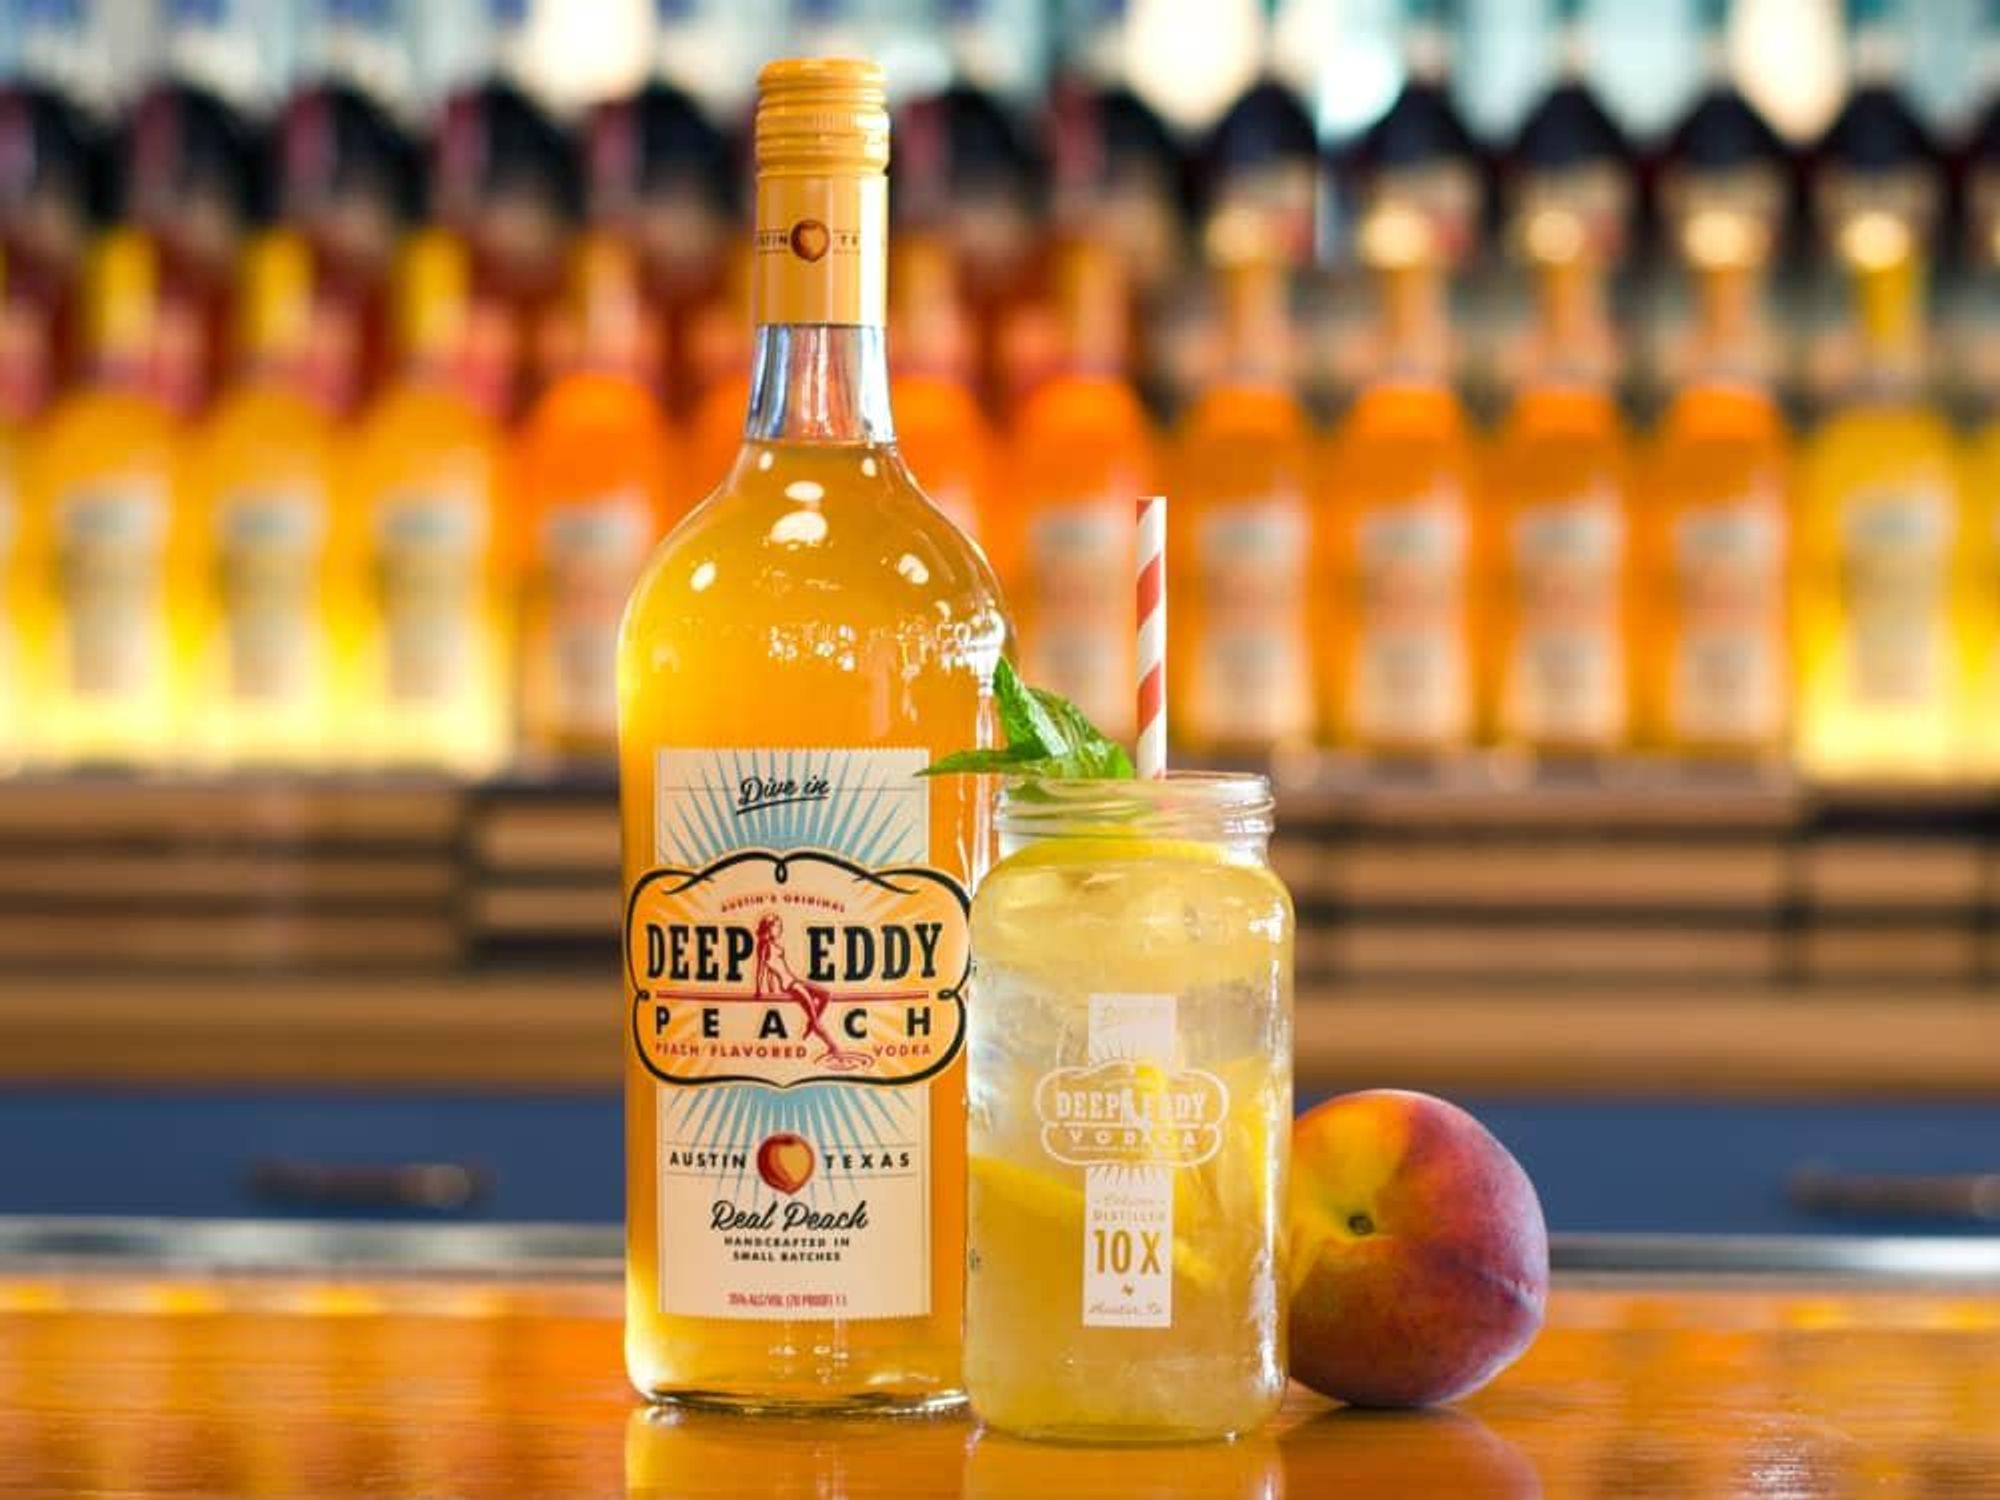 Deep Eddy Vodka Peach flavor peach lemonade cocktail drink 2016